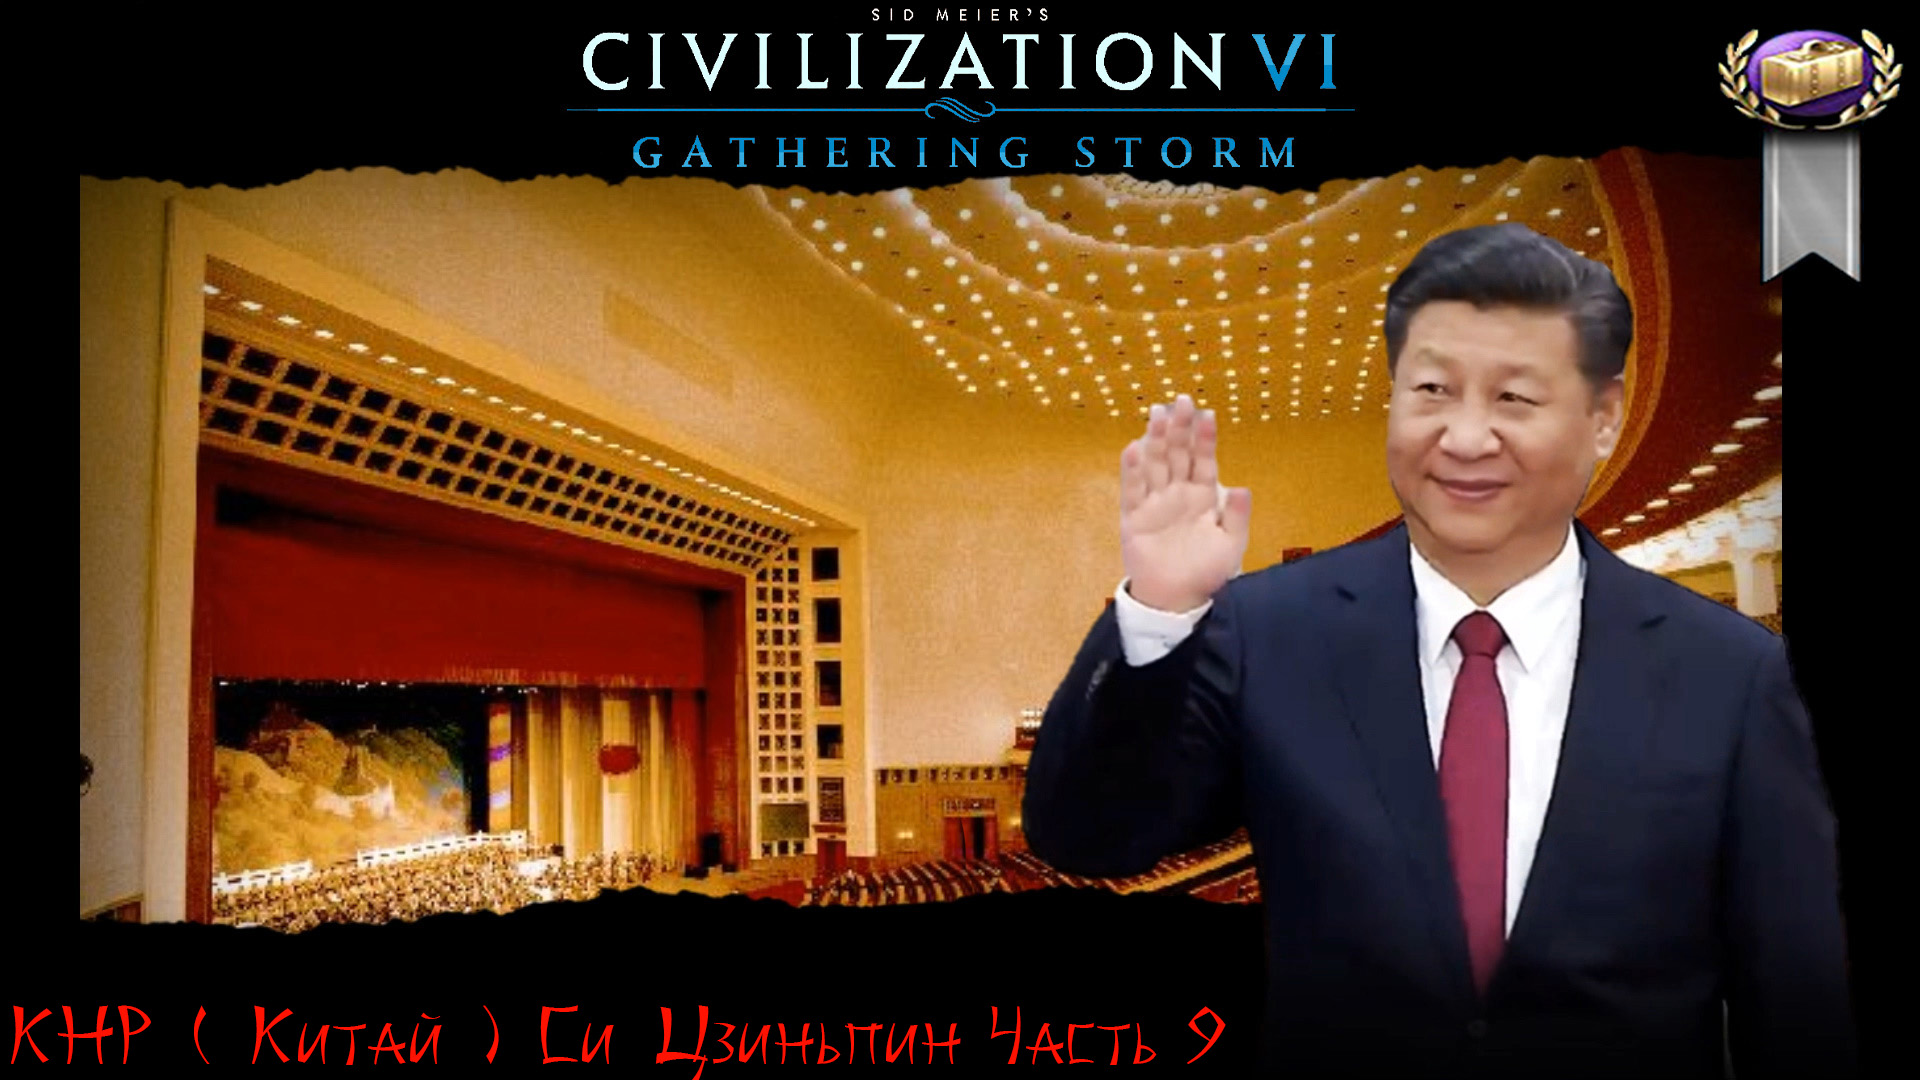 Sid Meier's Civilization VI КНР ( Китай ) Си Цзиньпин Часть 9